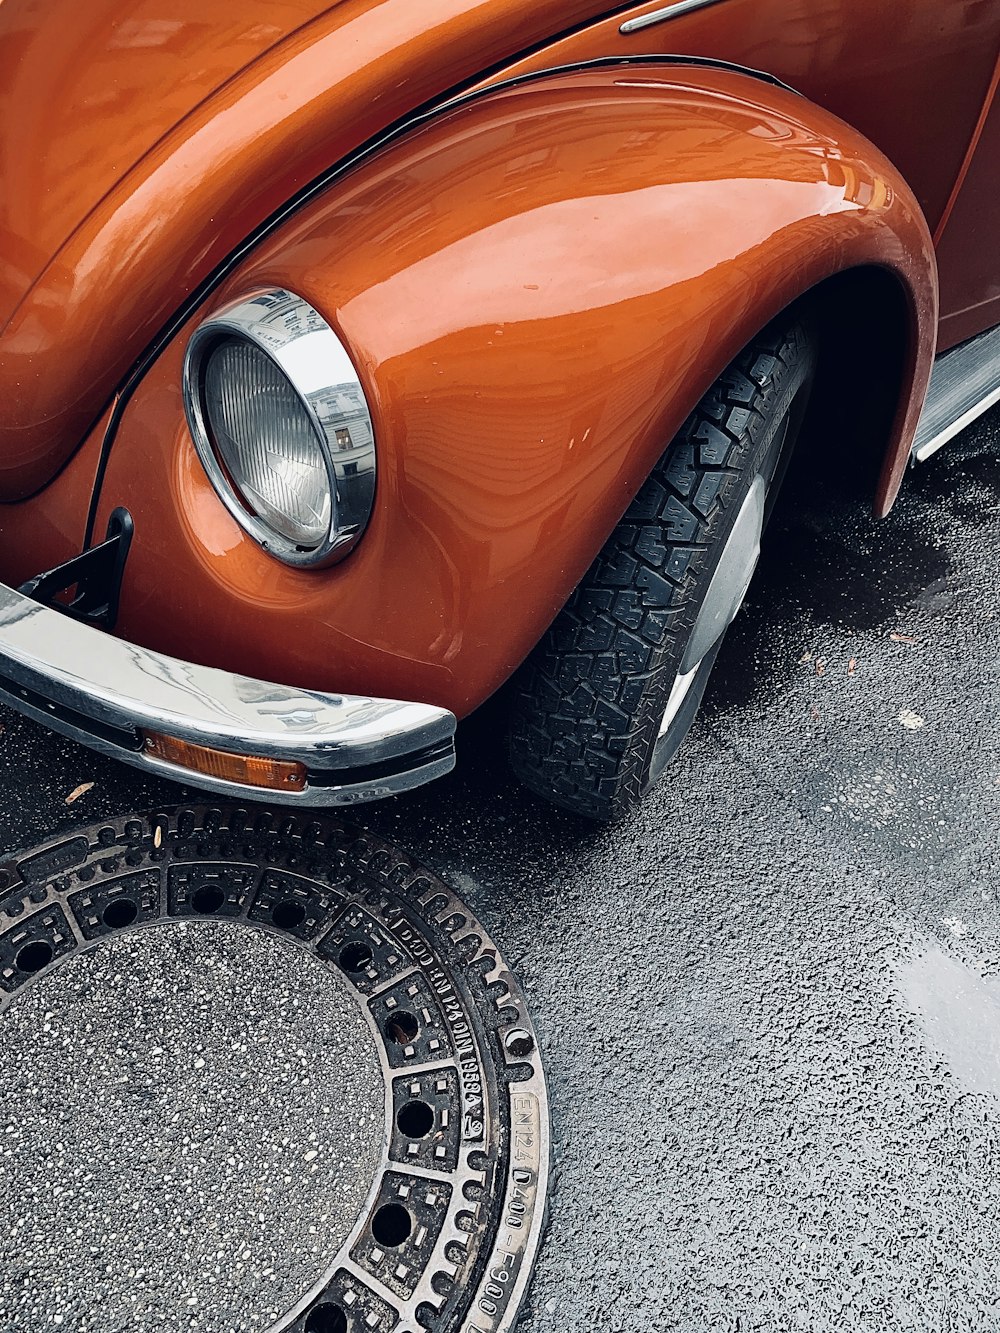 orange car on gray asphalt road